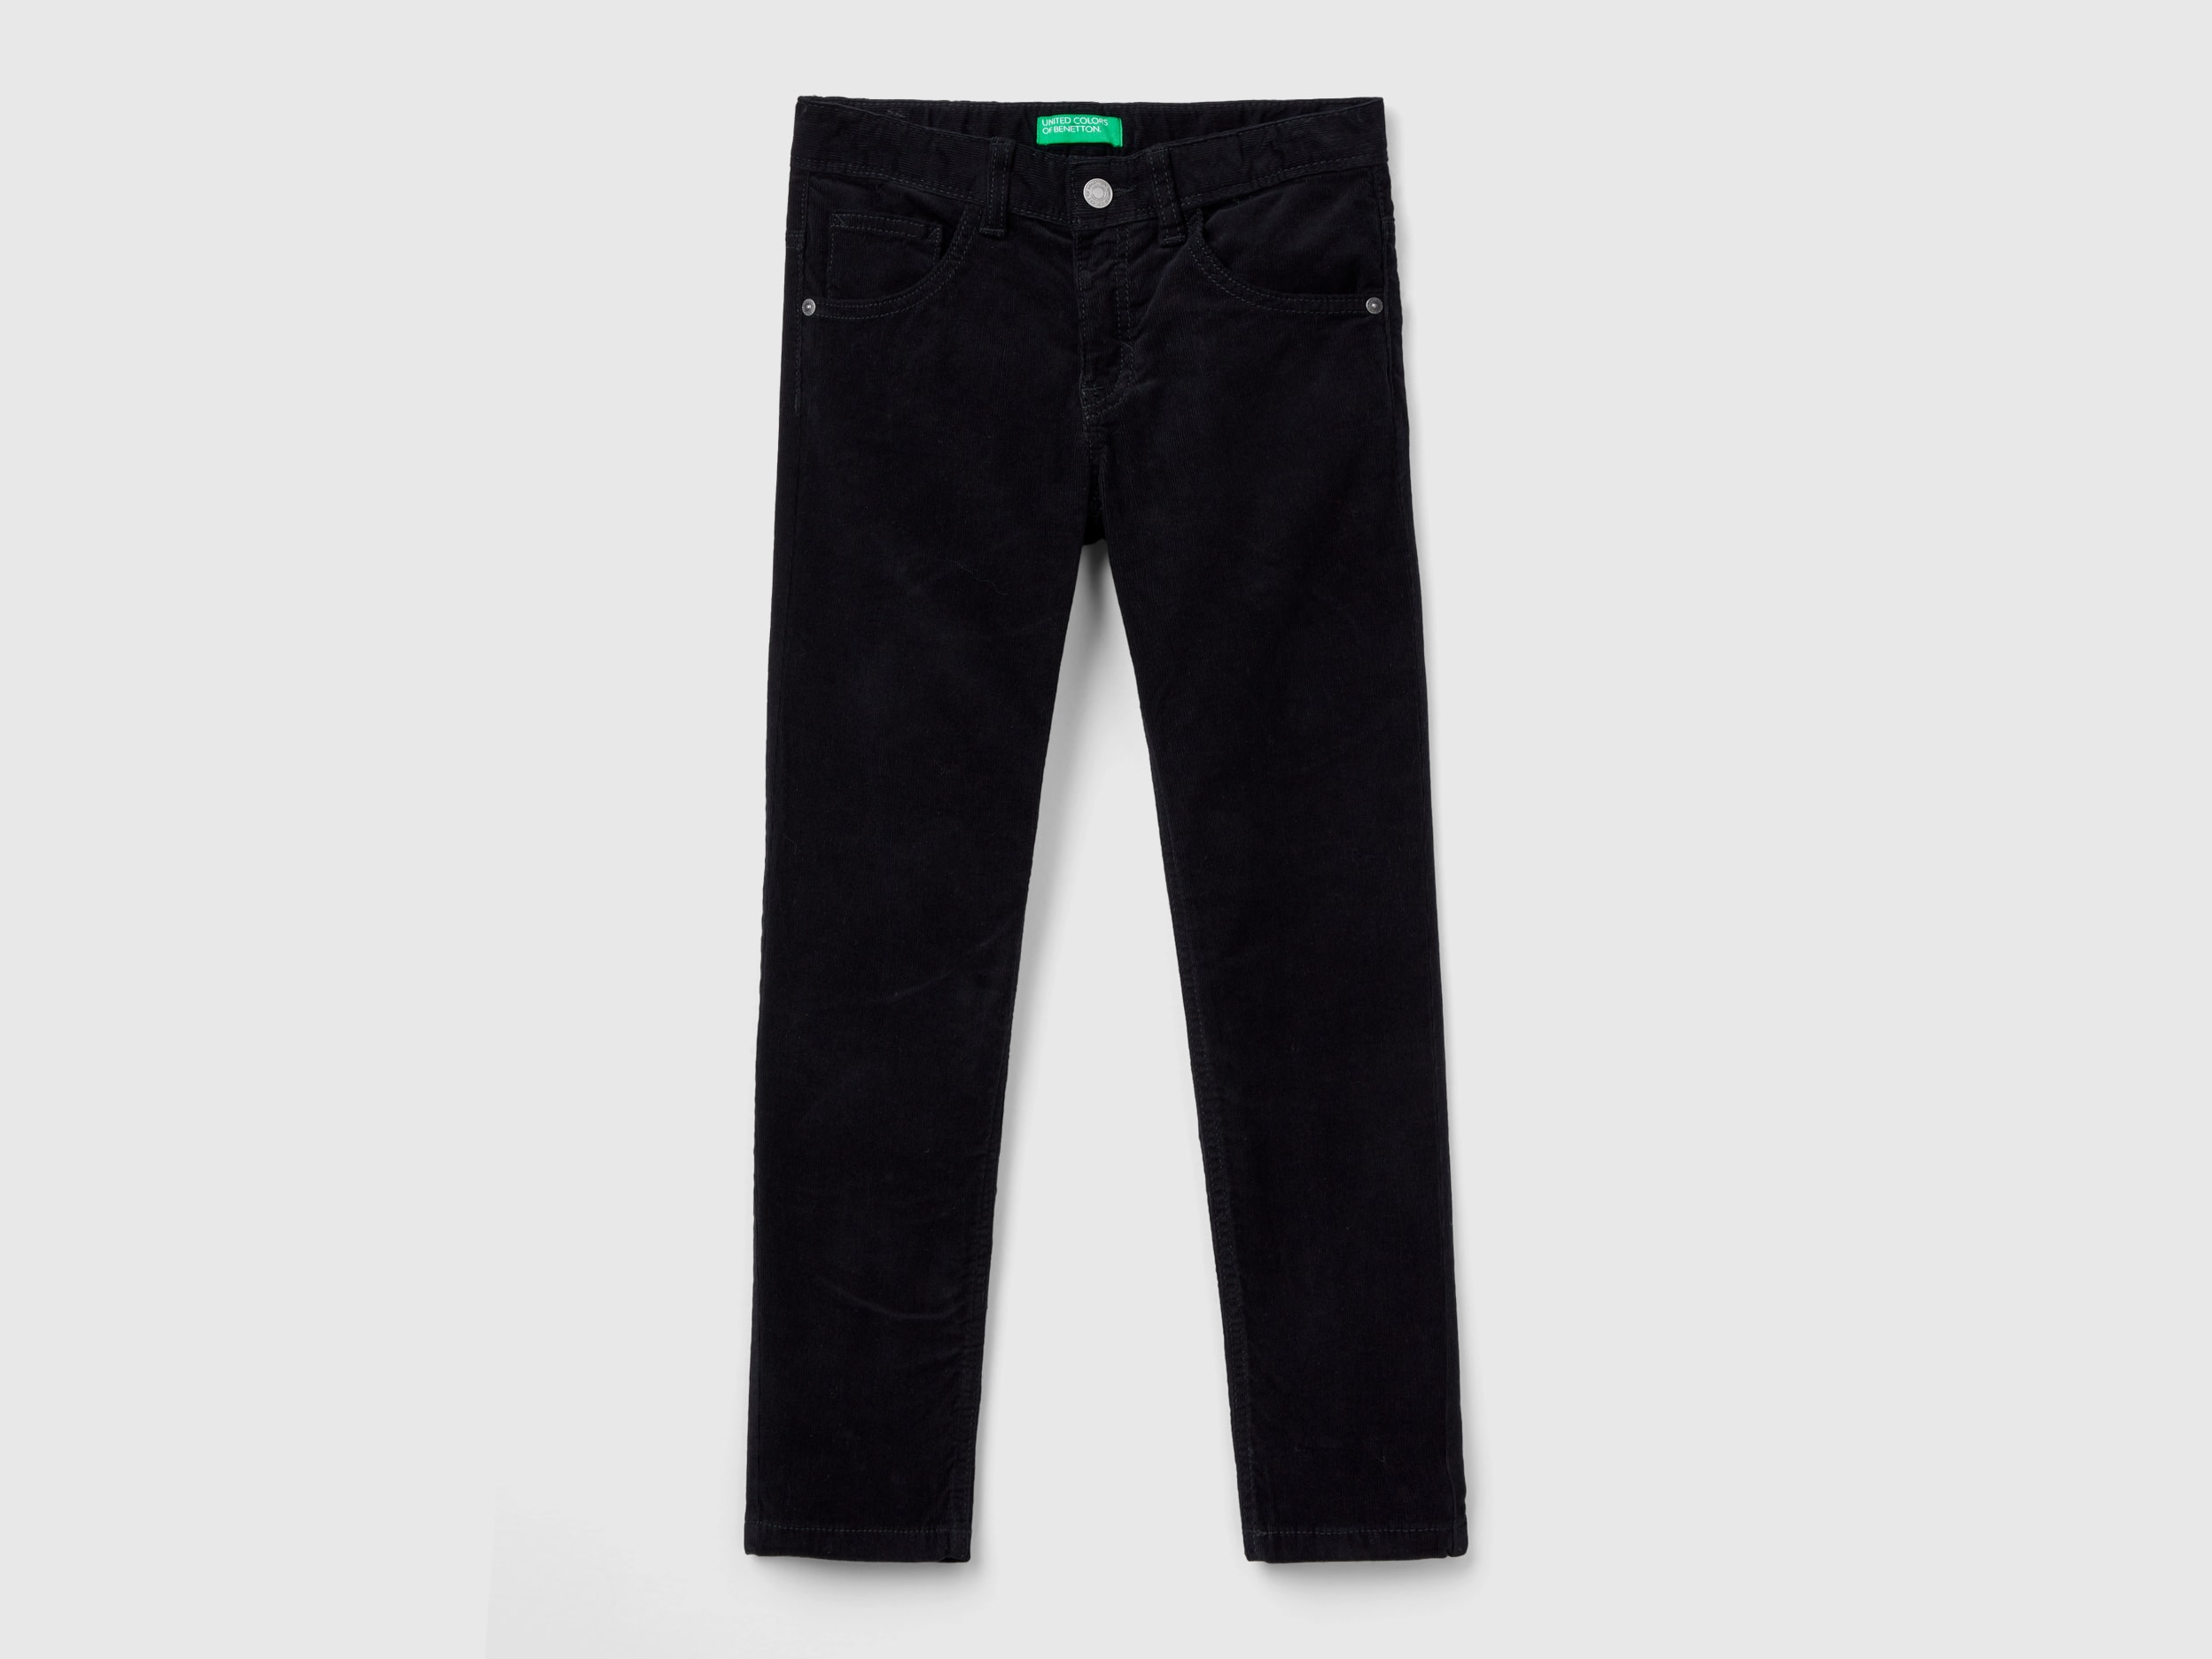 Benetton, Slim Fit Stretch Corduroy Trousers, size 3XL, Black, Kids